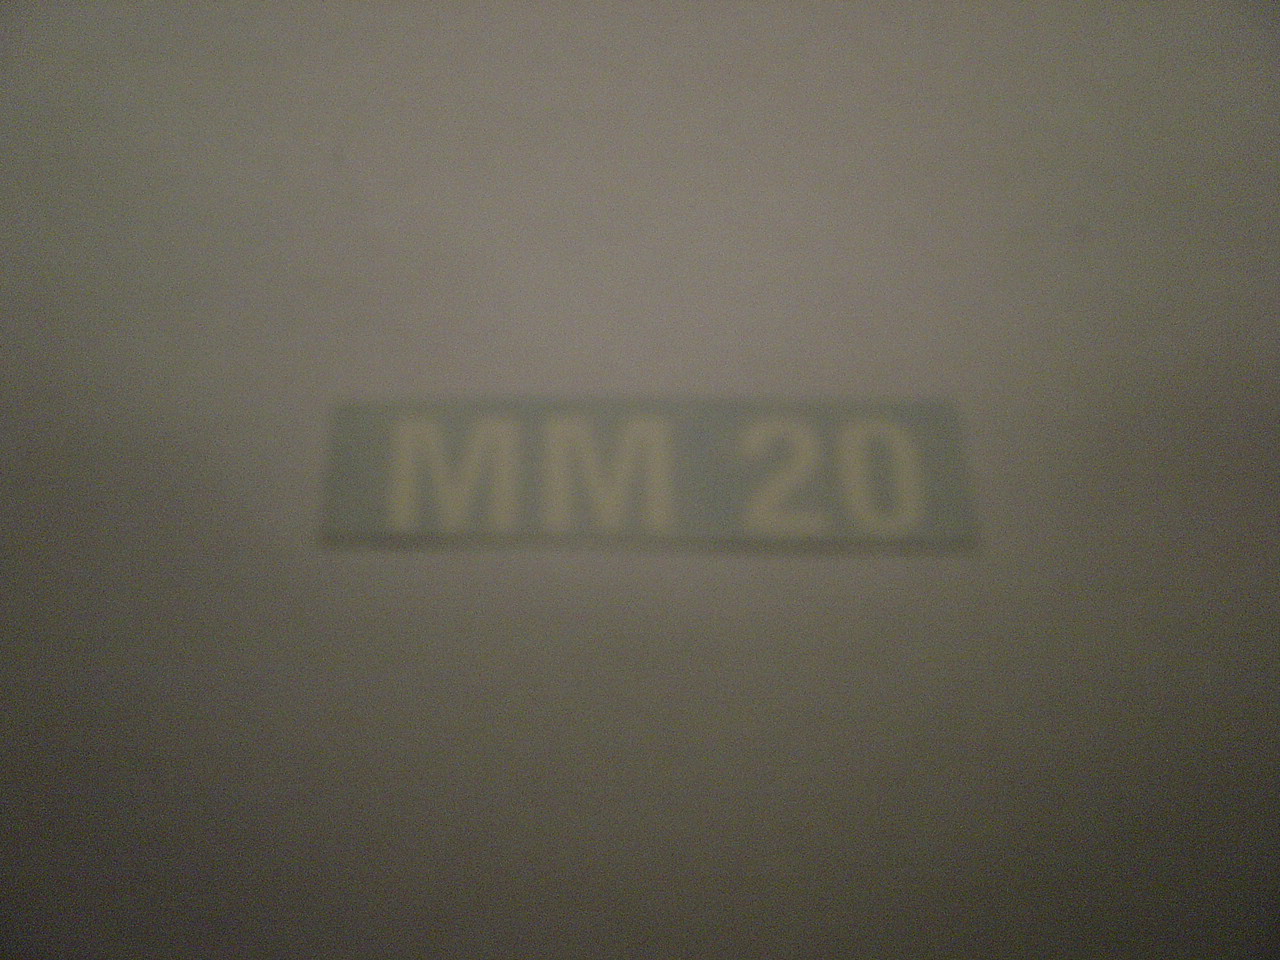 Sticker Lawn mower " MM 20 "